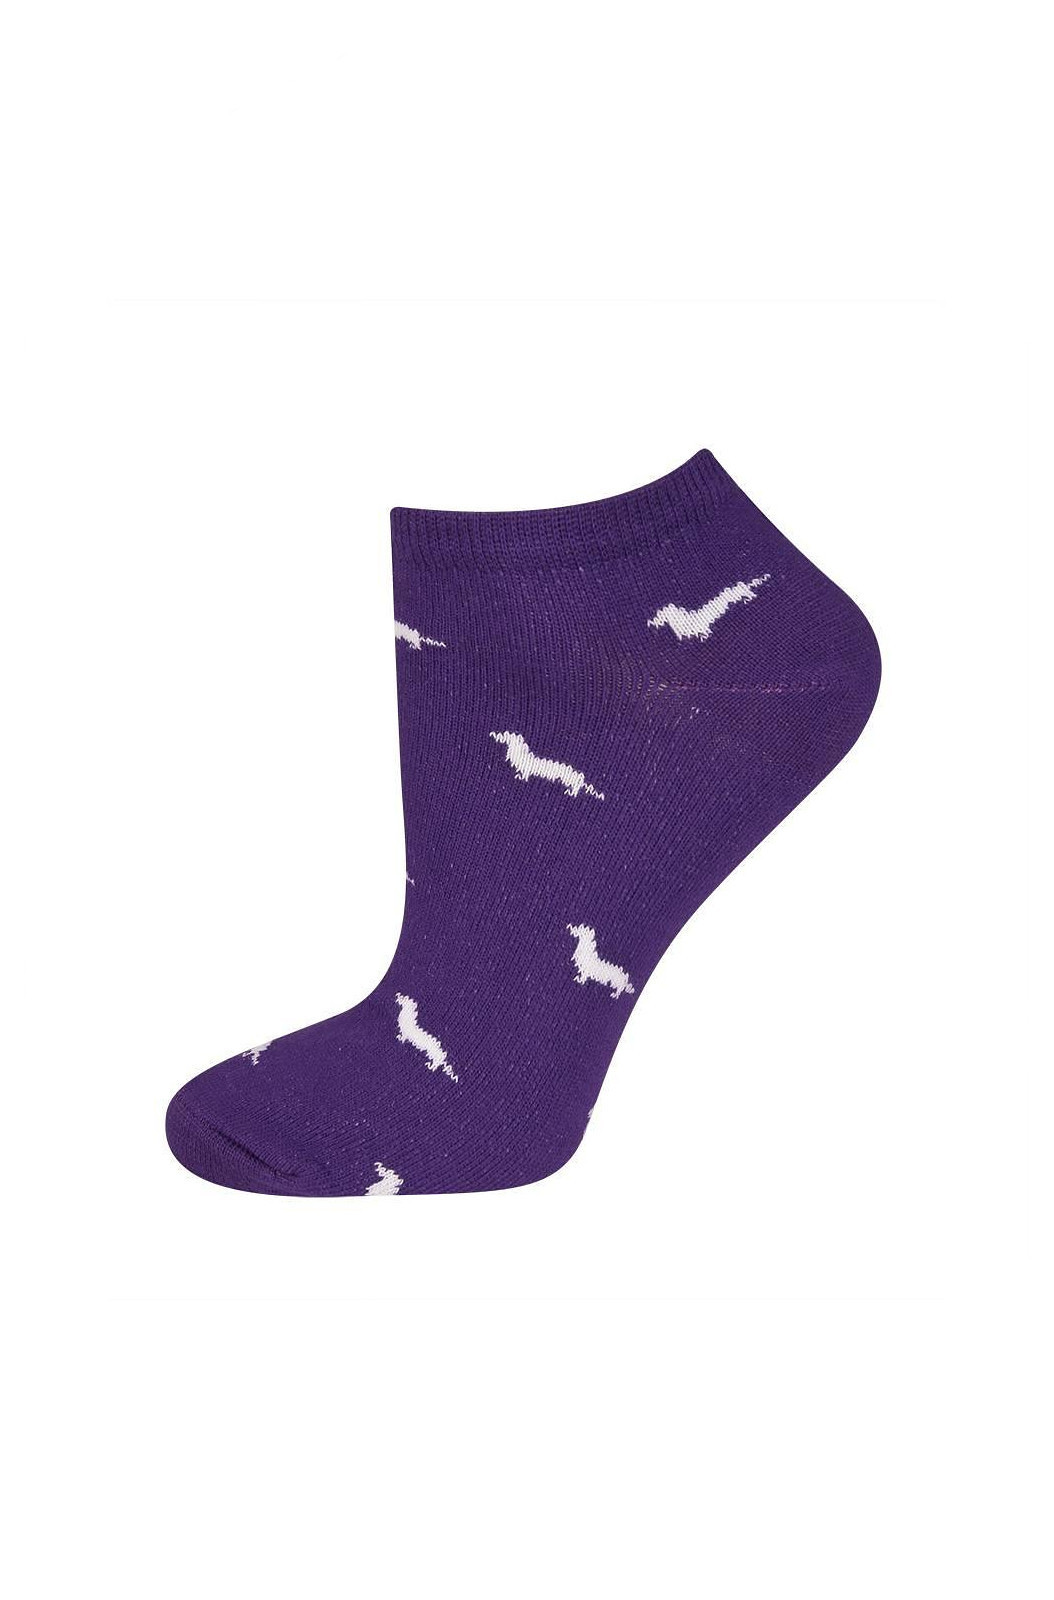 Dámské ponožky Soxo 67561 Barevné vzory fialová 35-40